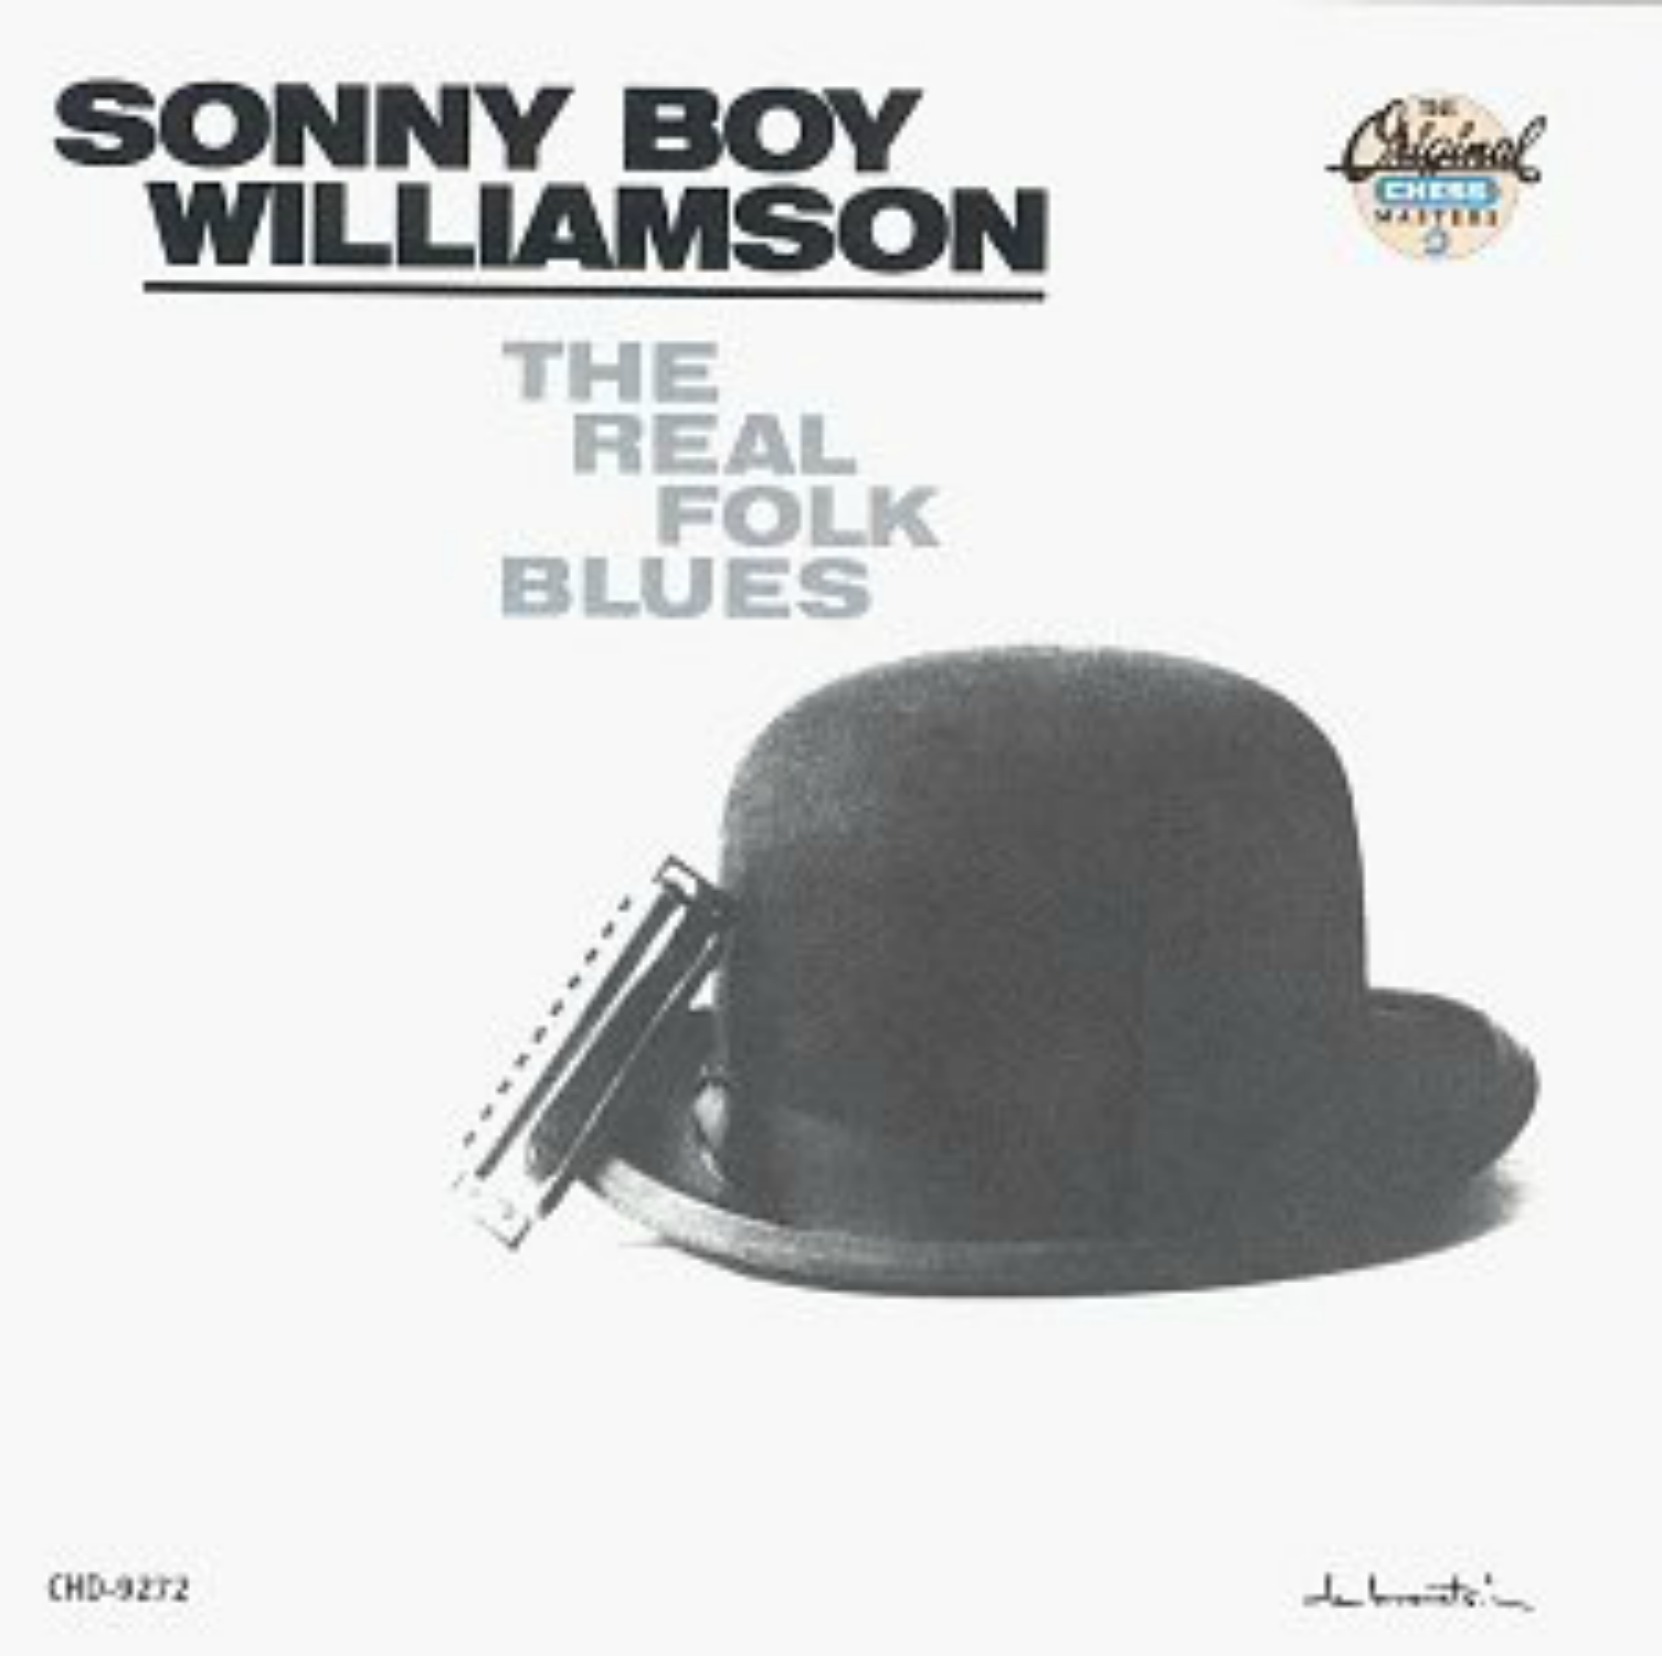 The Real Folk Blues by Sonny Boy Williamson, album cover